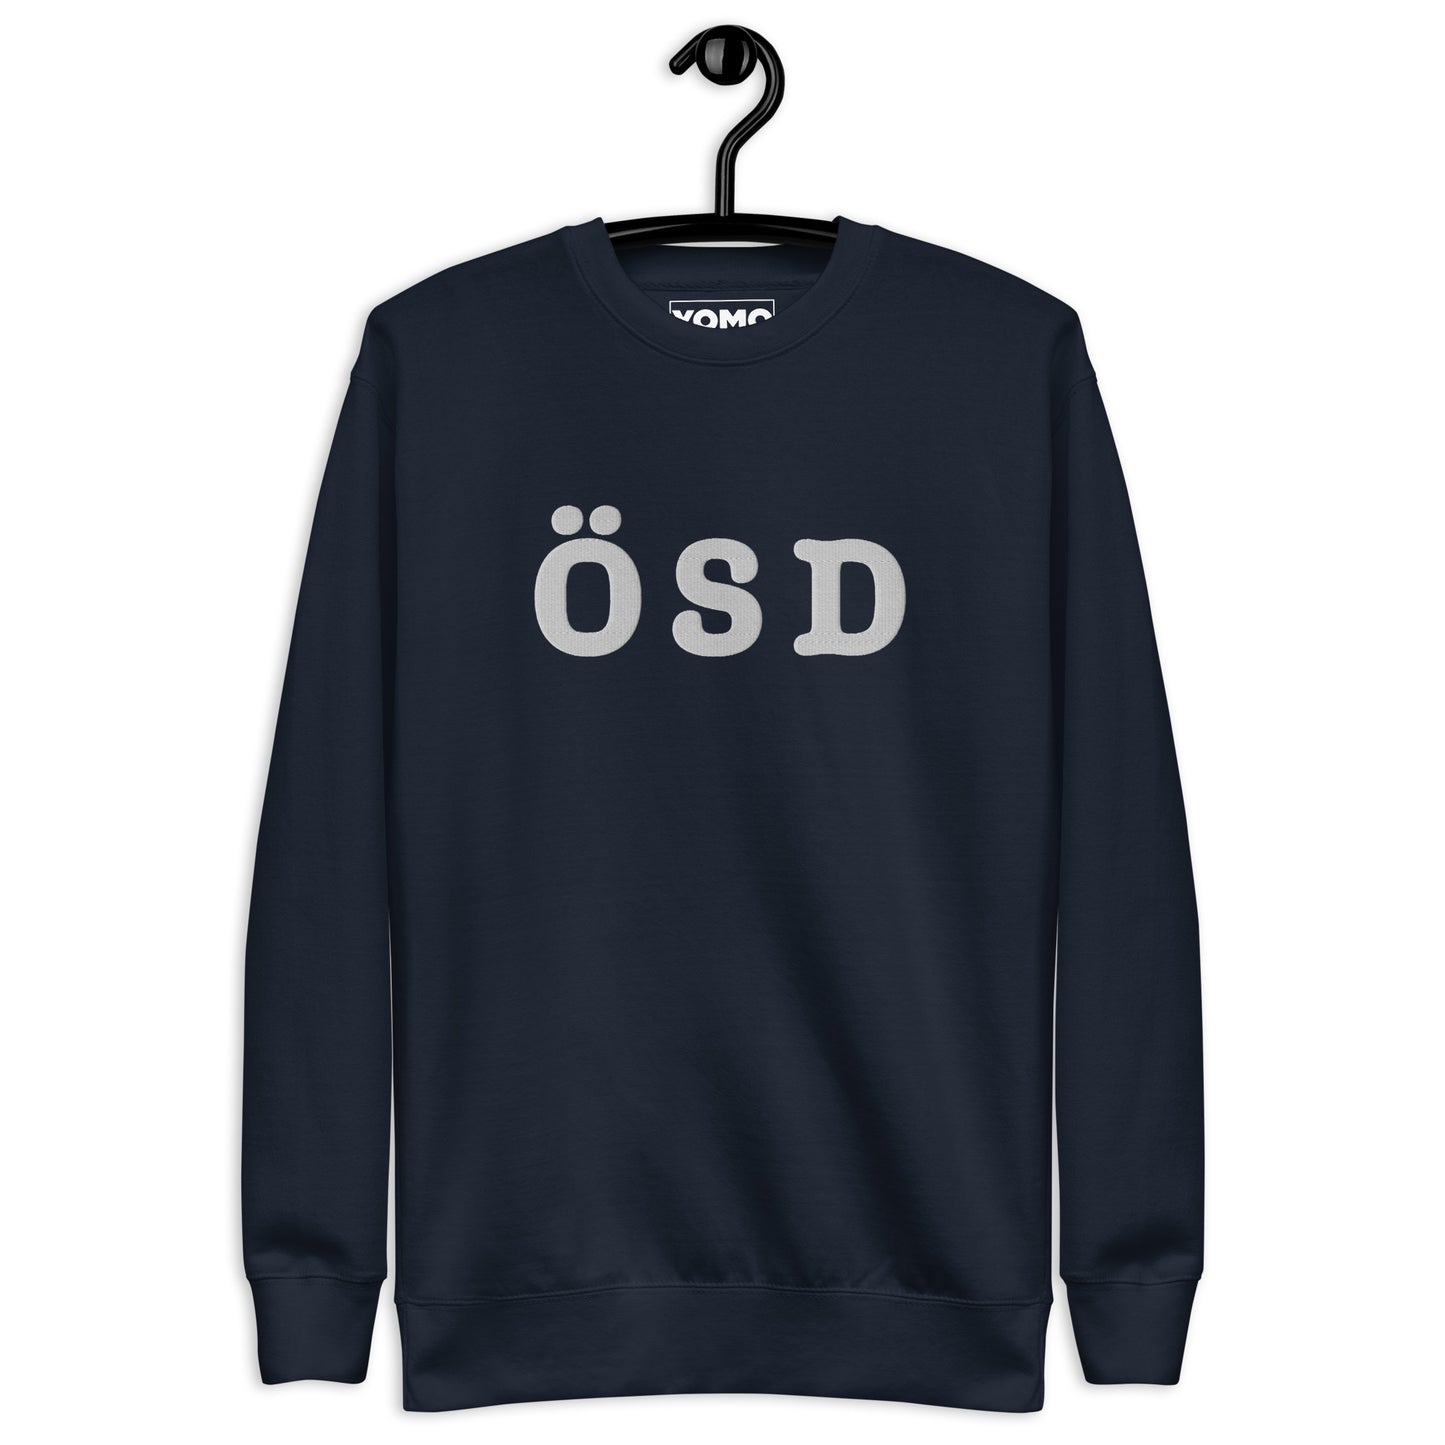 ÖSTERSUND (ÖSD) - Premium Unisex Sweatshirt/Collegetröja med vit brodyr - 4 färger